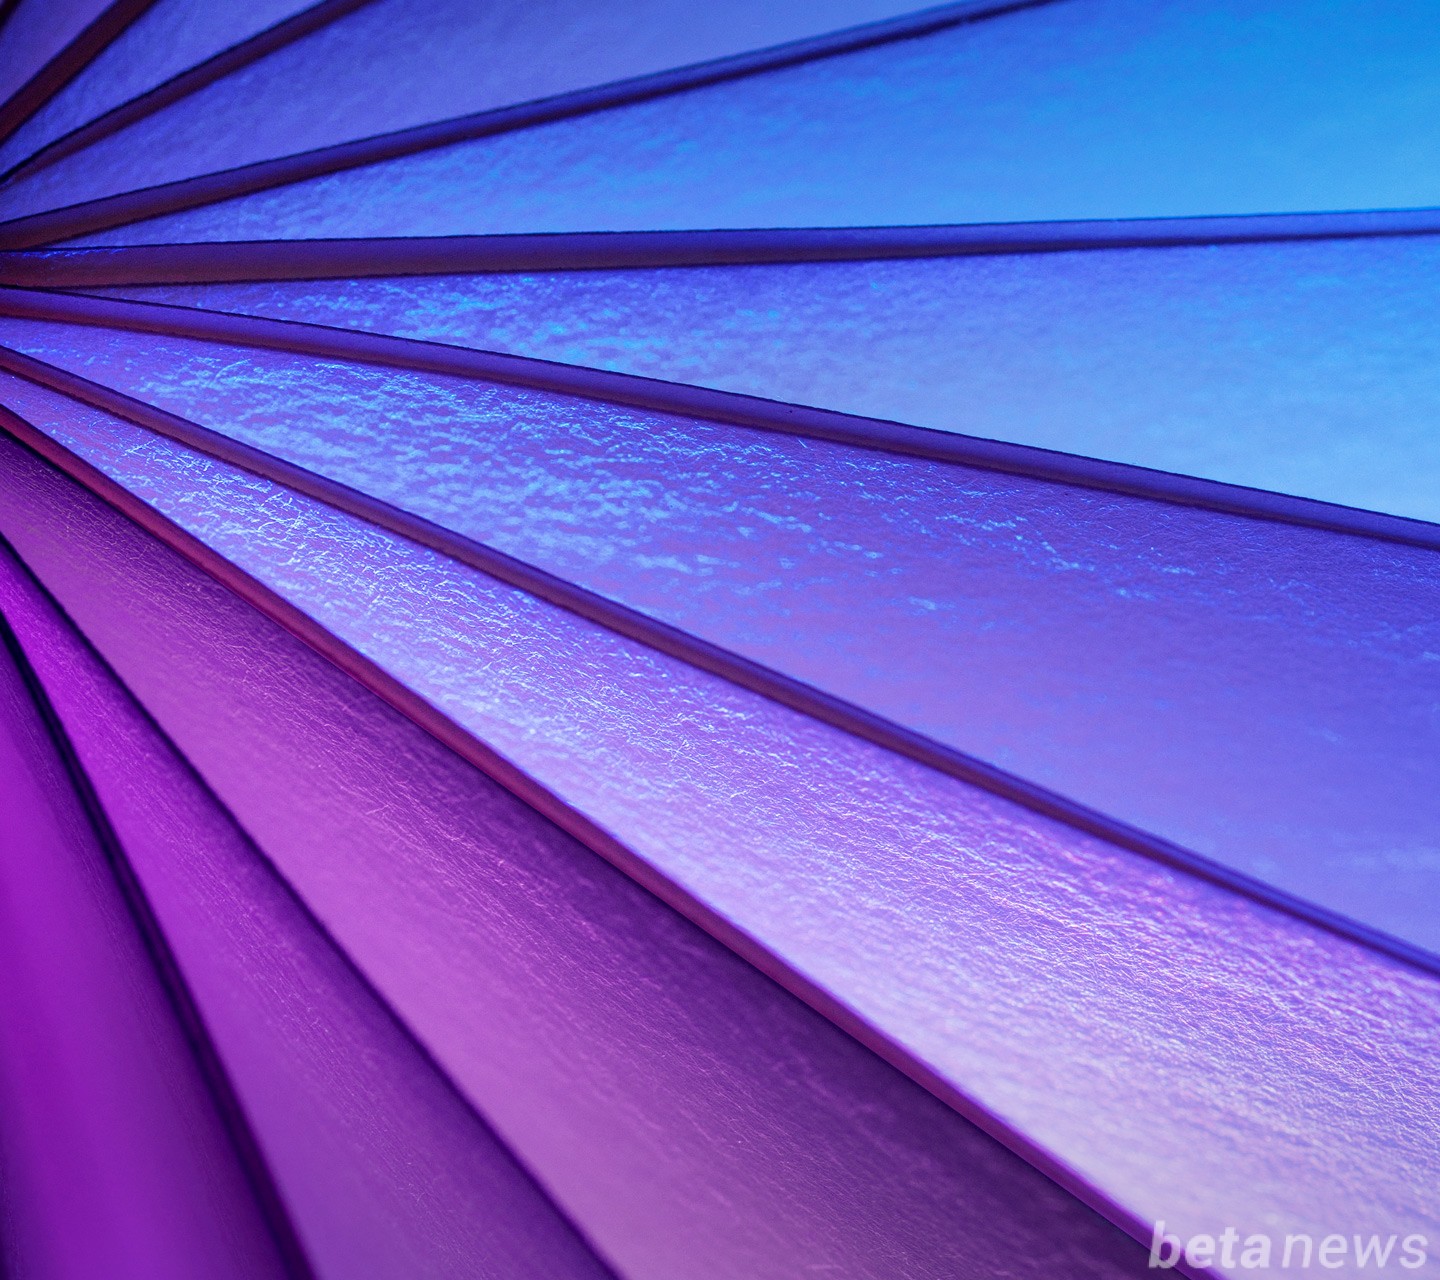 wallpaper for moto g4 plus,blue,violet,purple,light,line